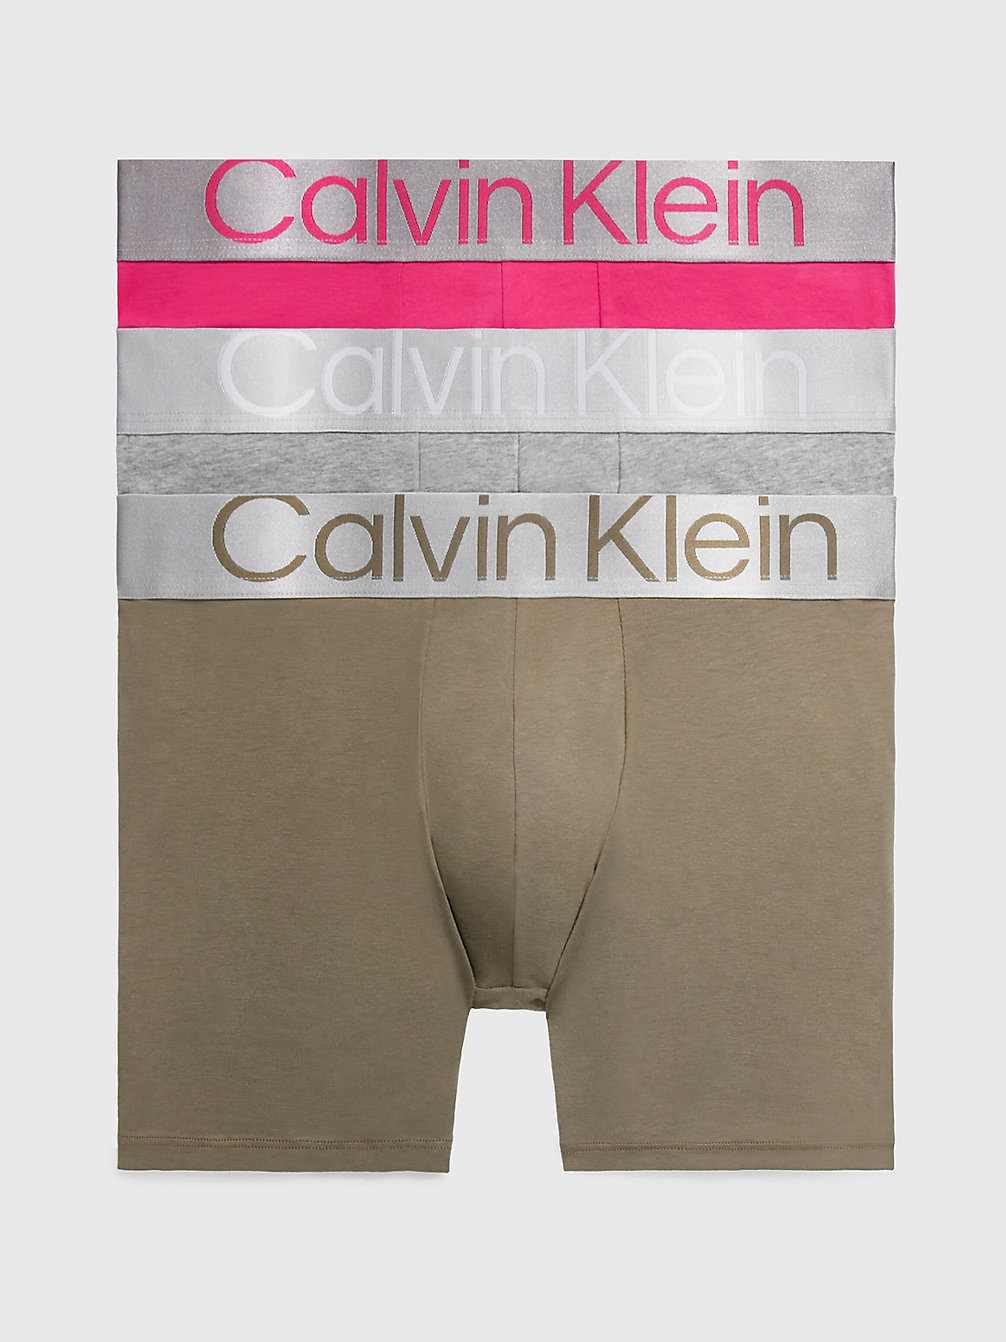 CERISE LIPSTICK, GRY HTHR, GRAY OLV Lot De 3 Caleçons - Steel Cotton undefined hommes Calvin Klein